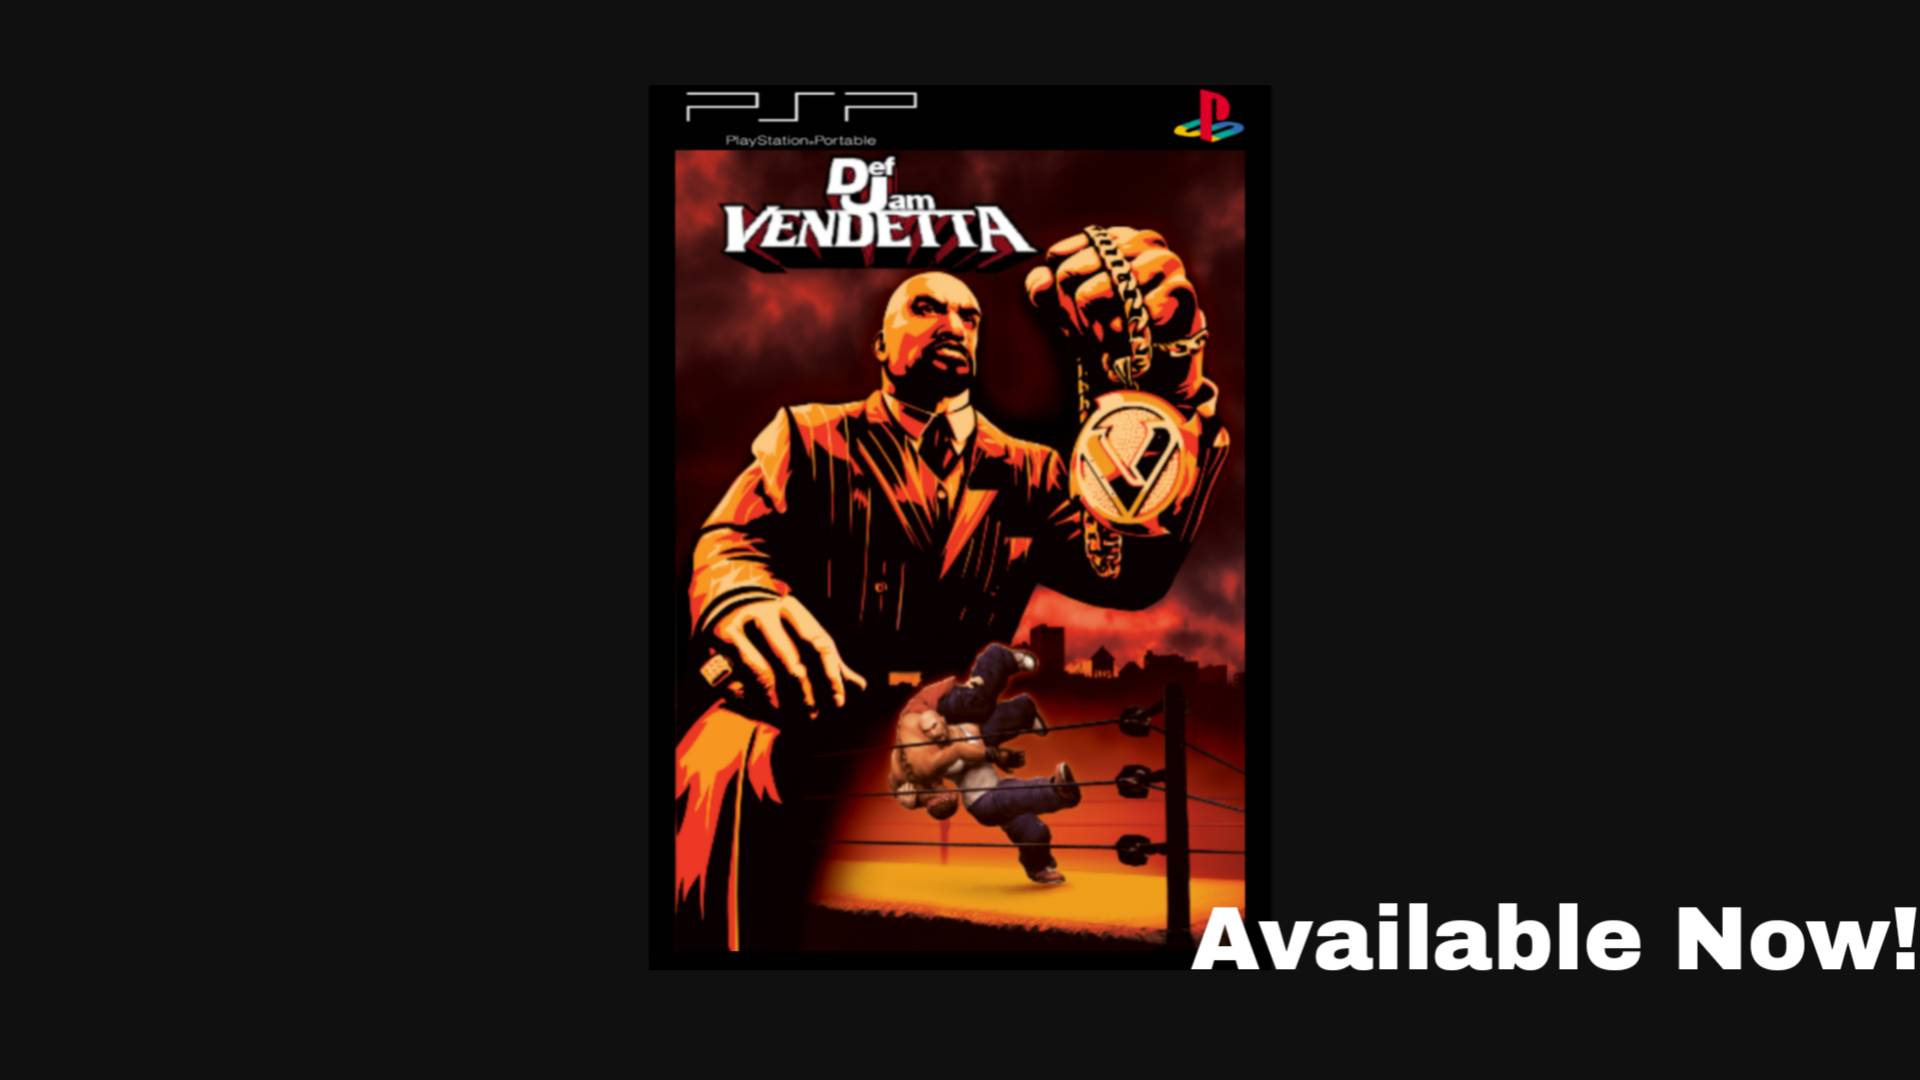 DEF JAM VENDETTA - Playstation 2 (PS2) iso download